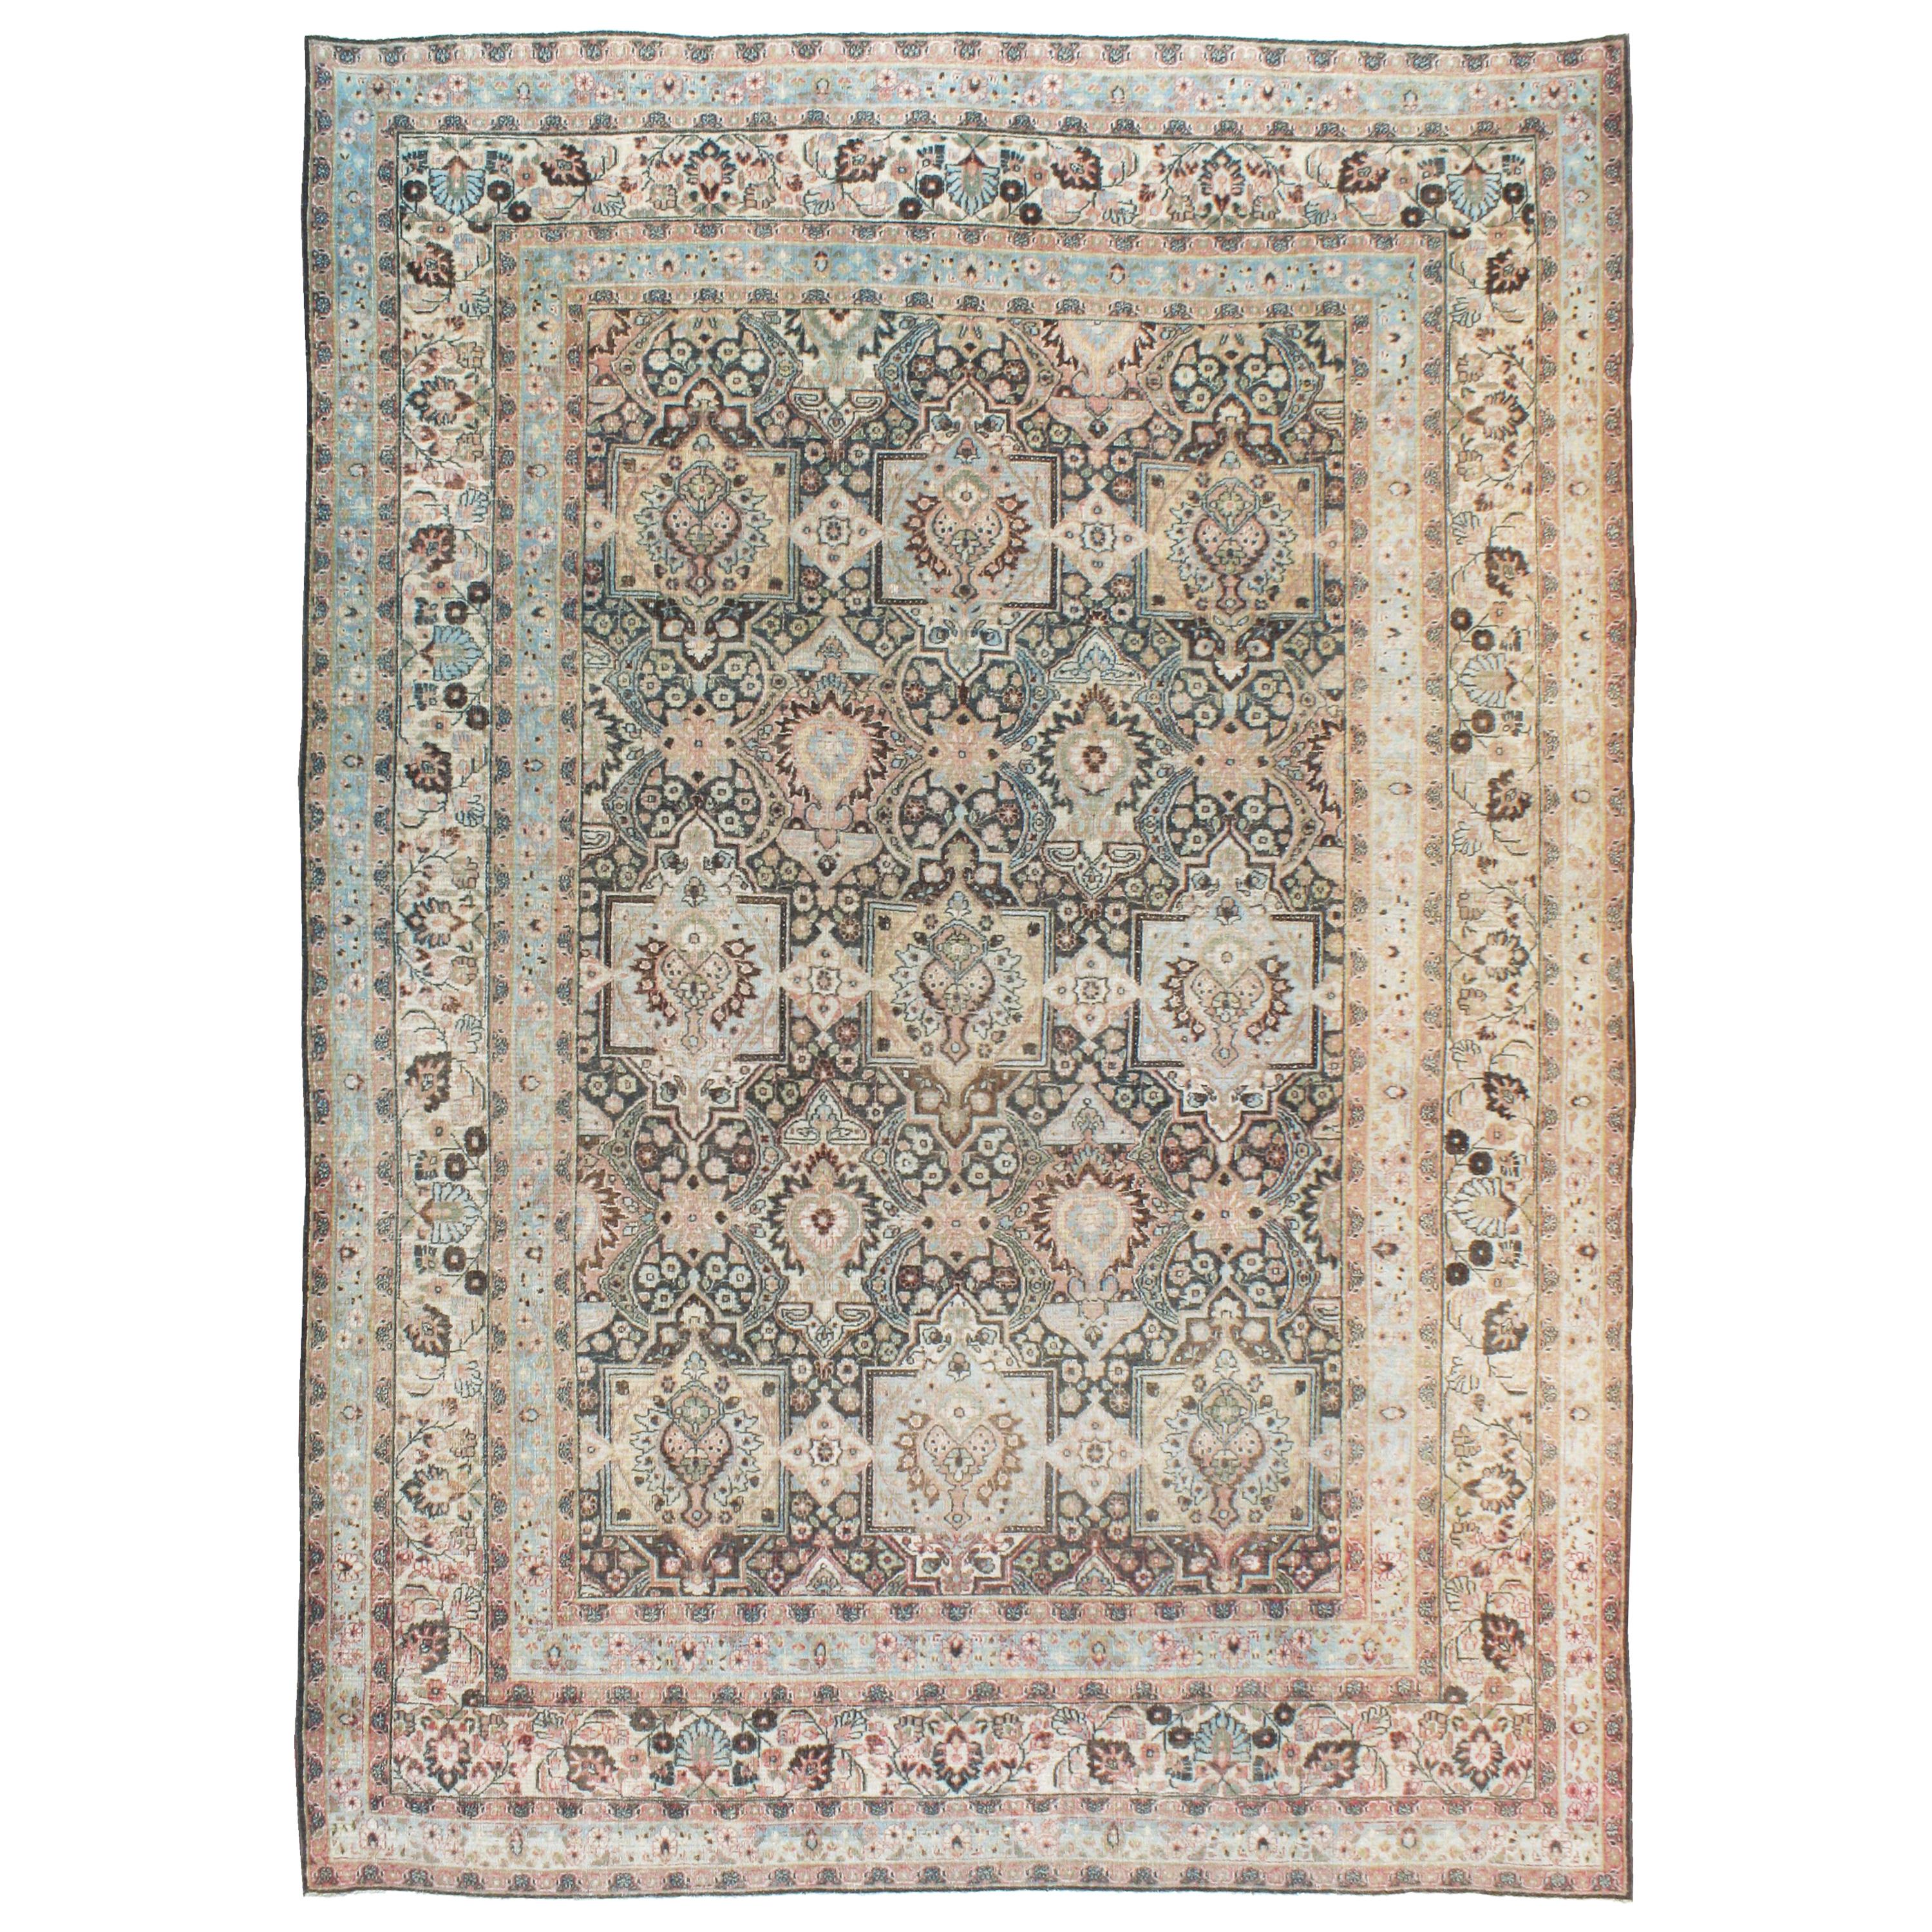 Antique Persian Dorokhsh Carpet